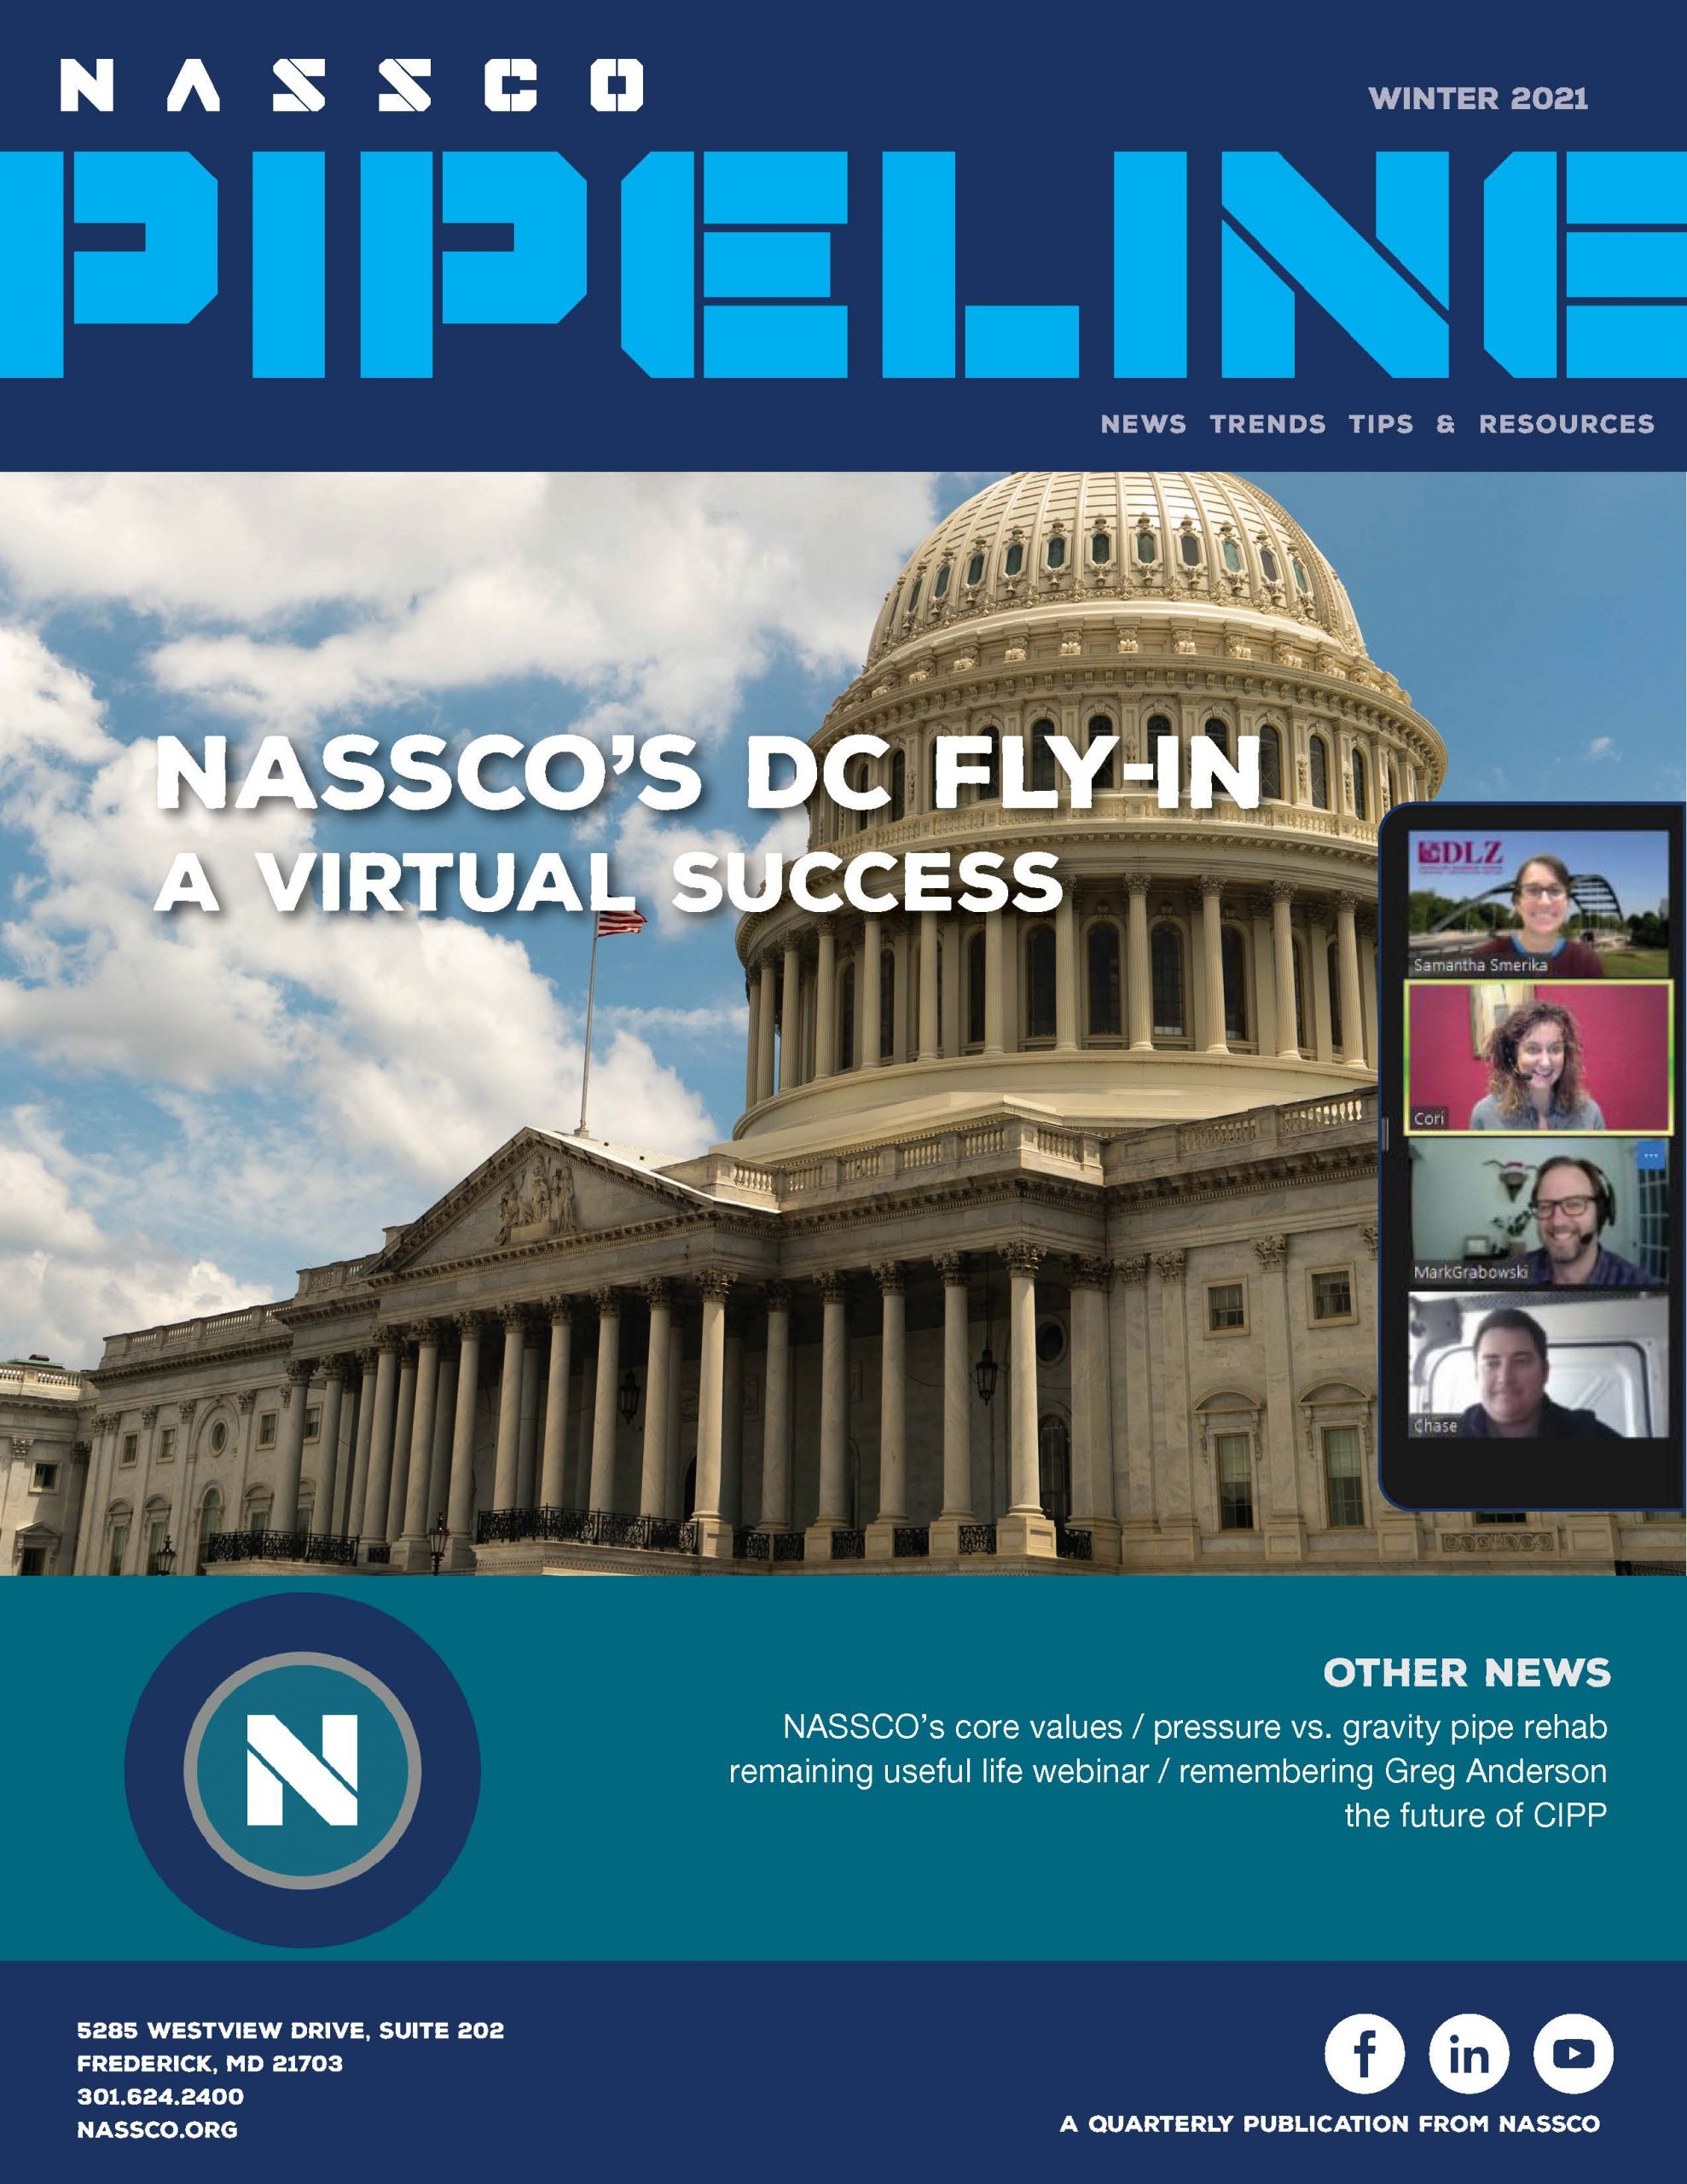 Pipeline, February 2021 – Winter Issue